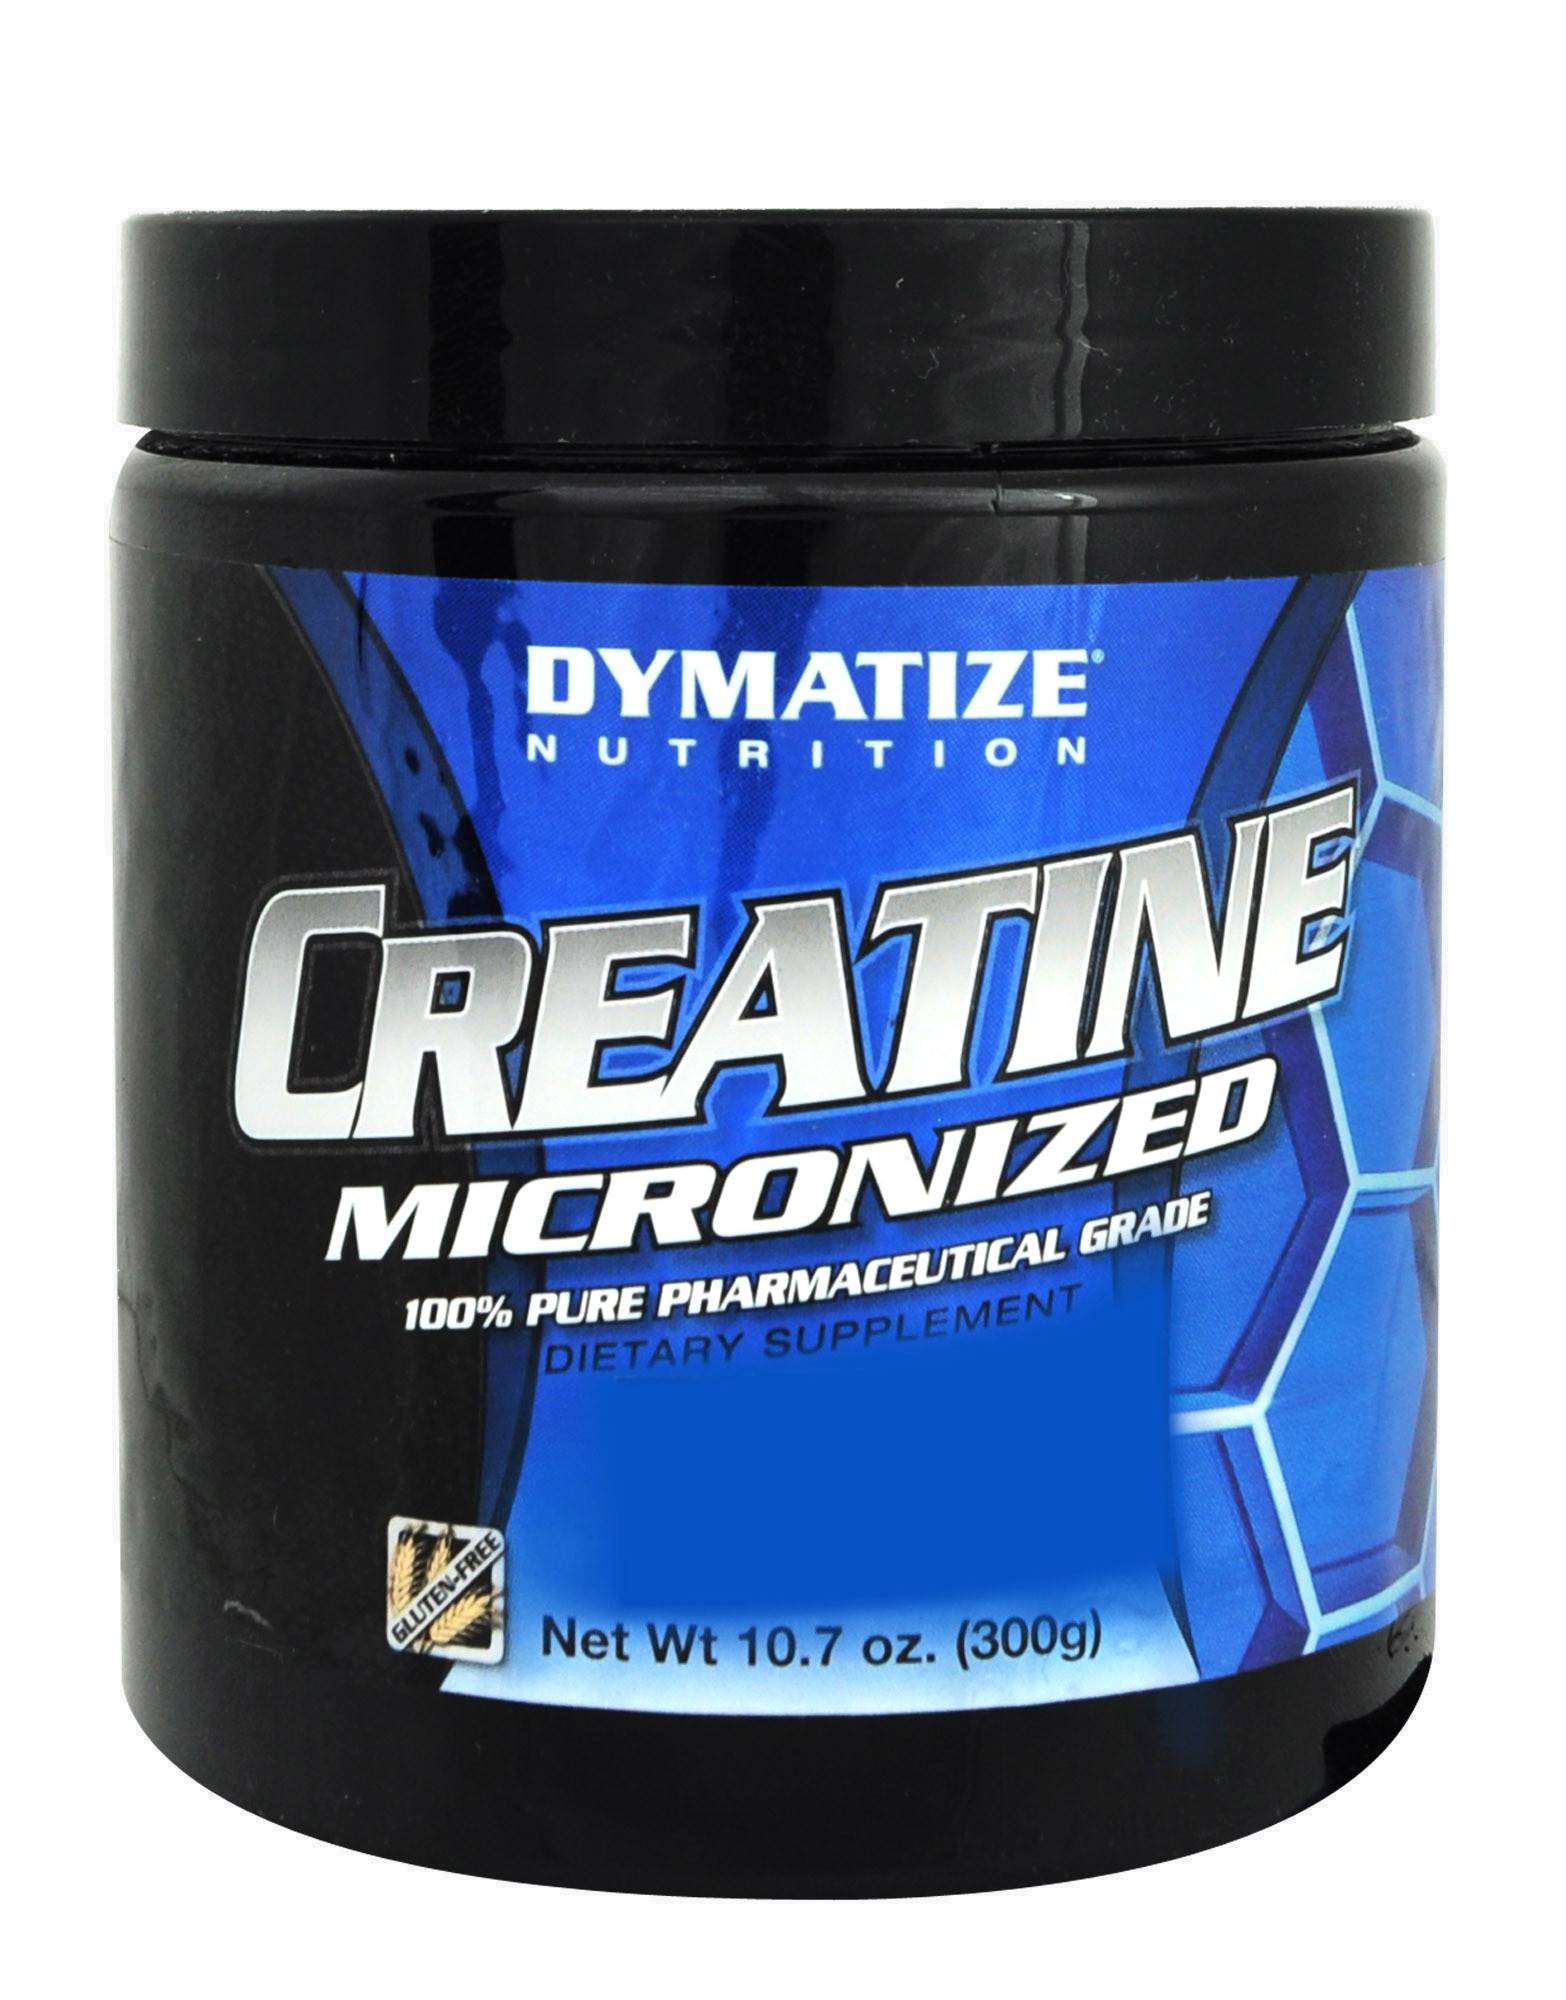 Отзывы на креатин моногидрат creatine micronized dymatize от покупателей 5lb.ru